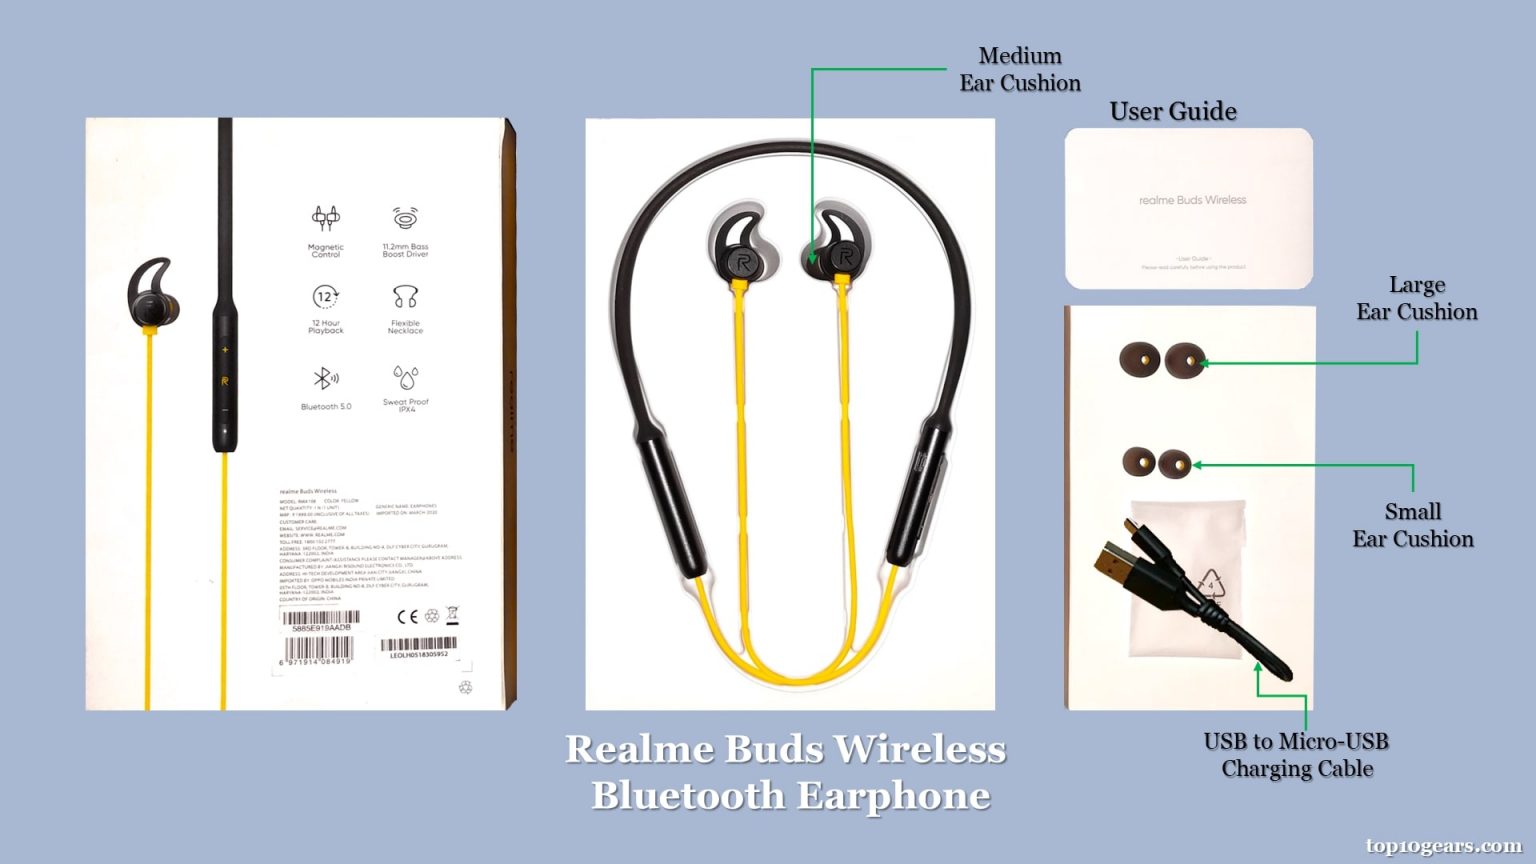 Realme buds wireless bluetooth earphone